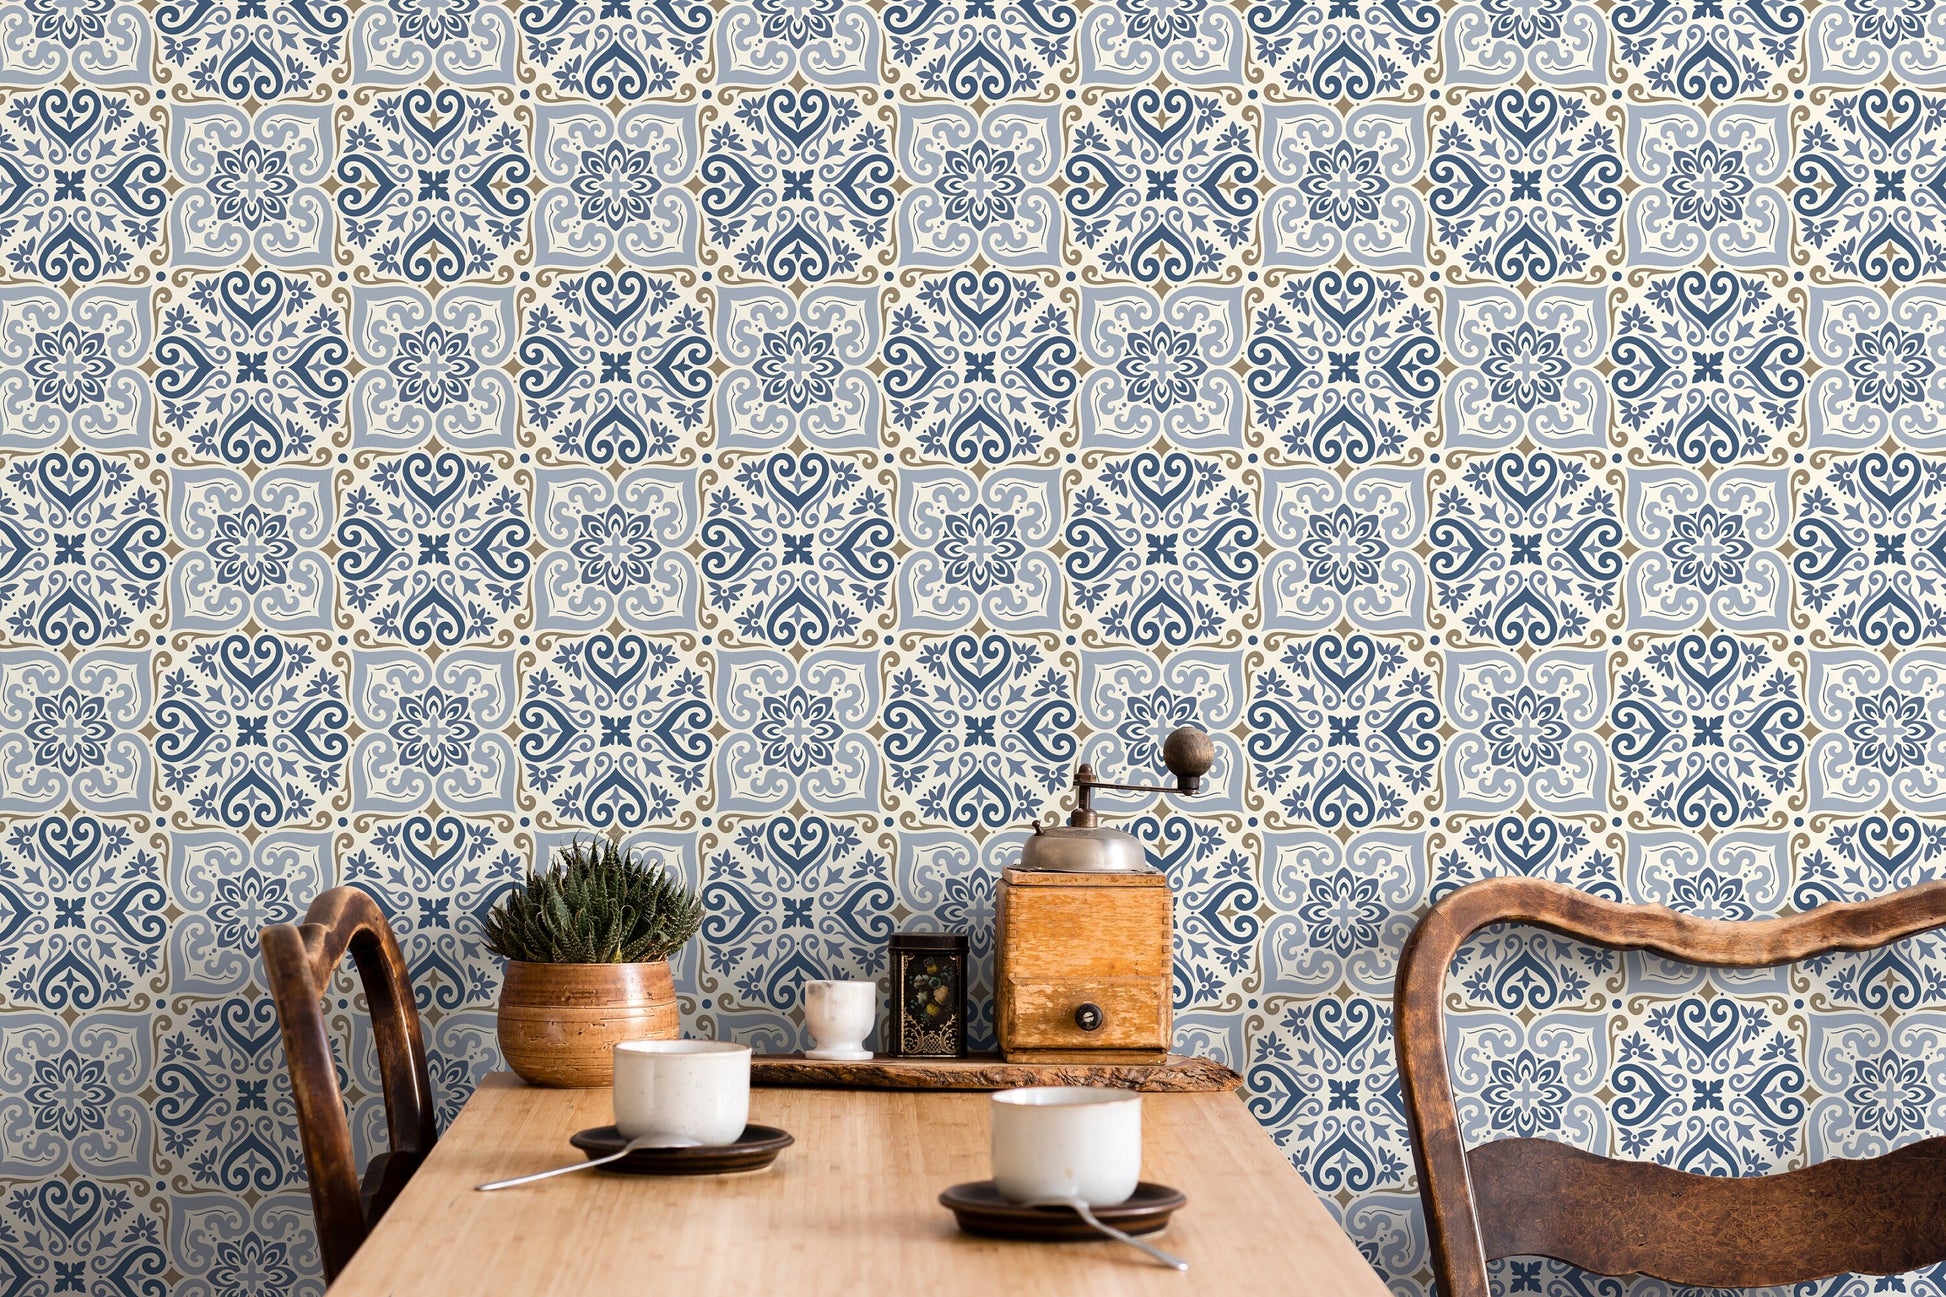 Blue Moroccan Tile Wallpaper / Peel and Stick Wallpaper Removable Wallpaper Home Decor Wall Art Wall Decor Room Decor - D162